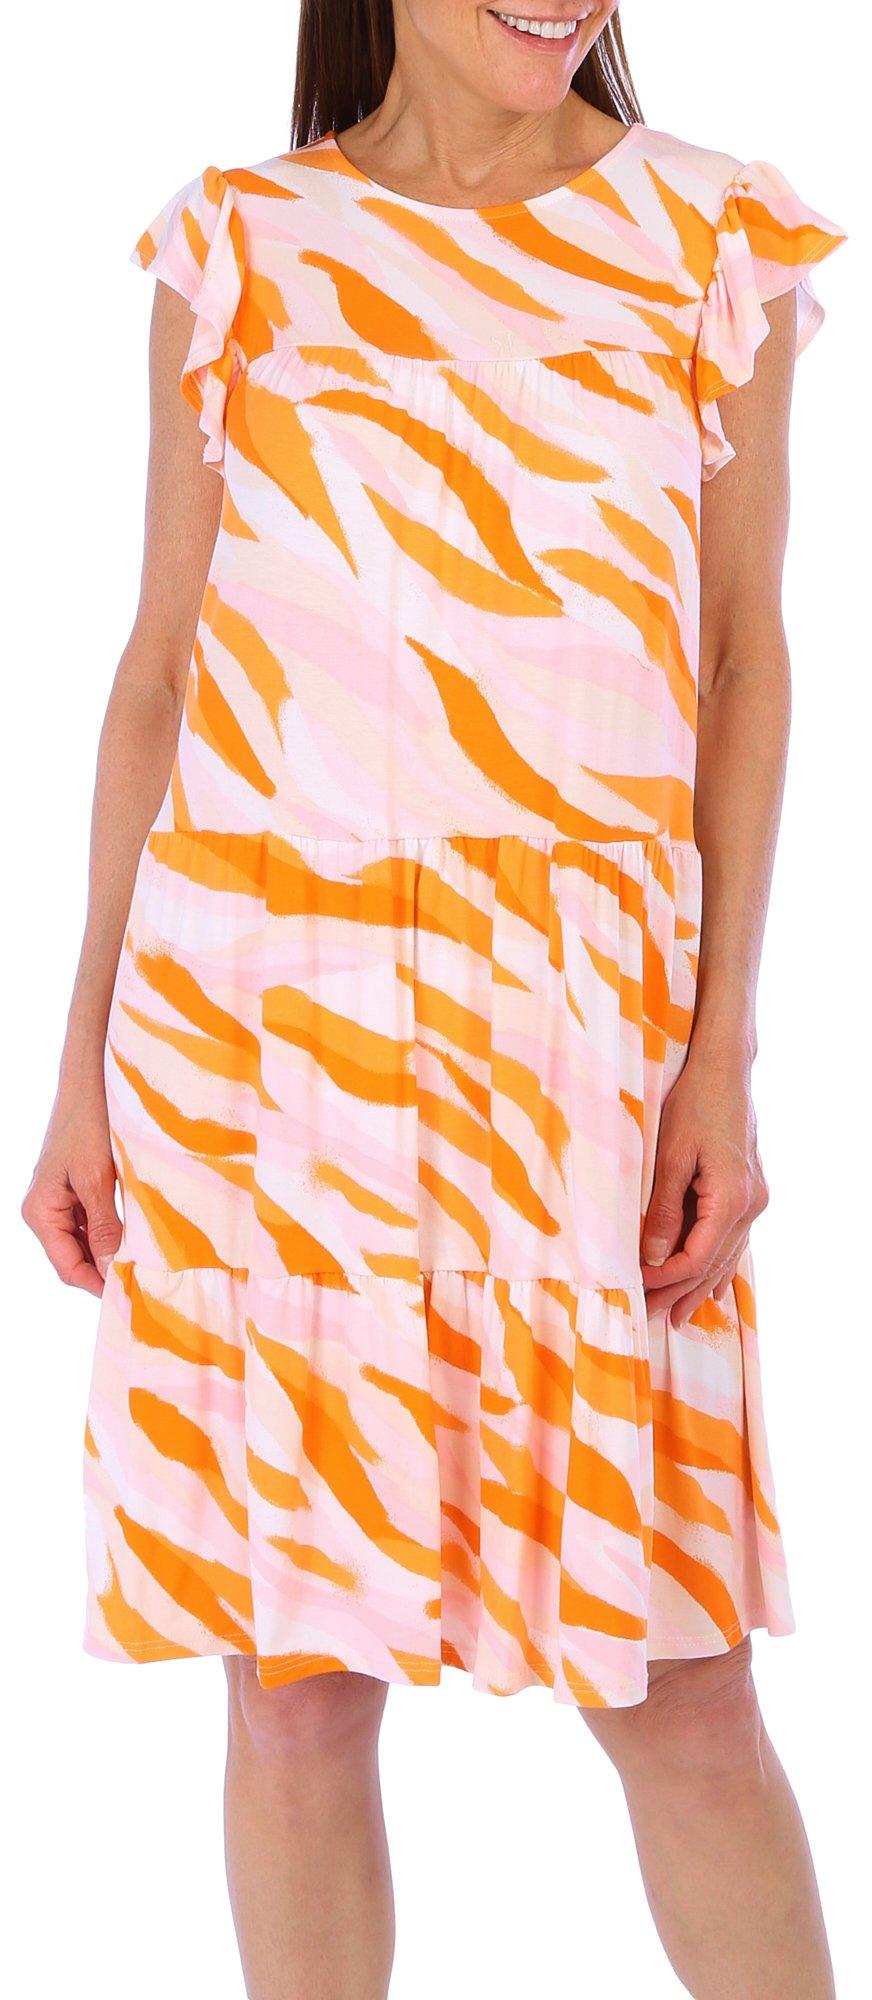 Lexington Avenue Womens Print Ruffle Short Sleeve Dress